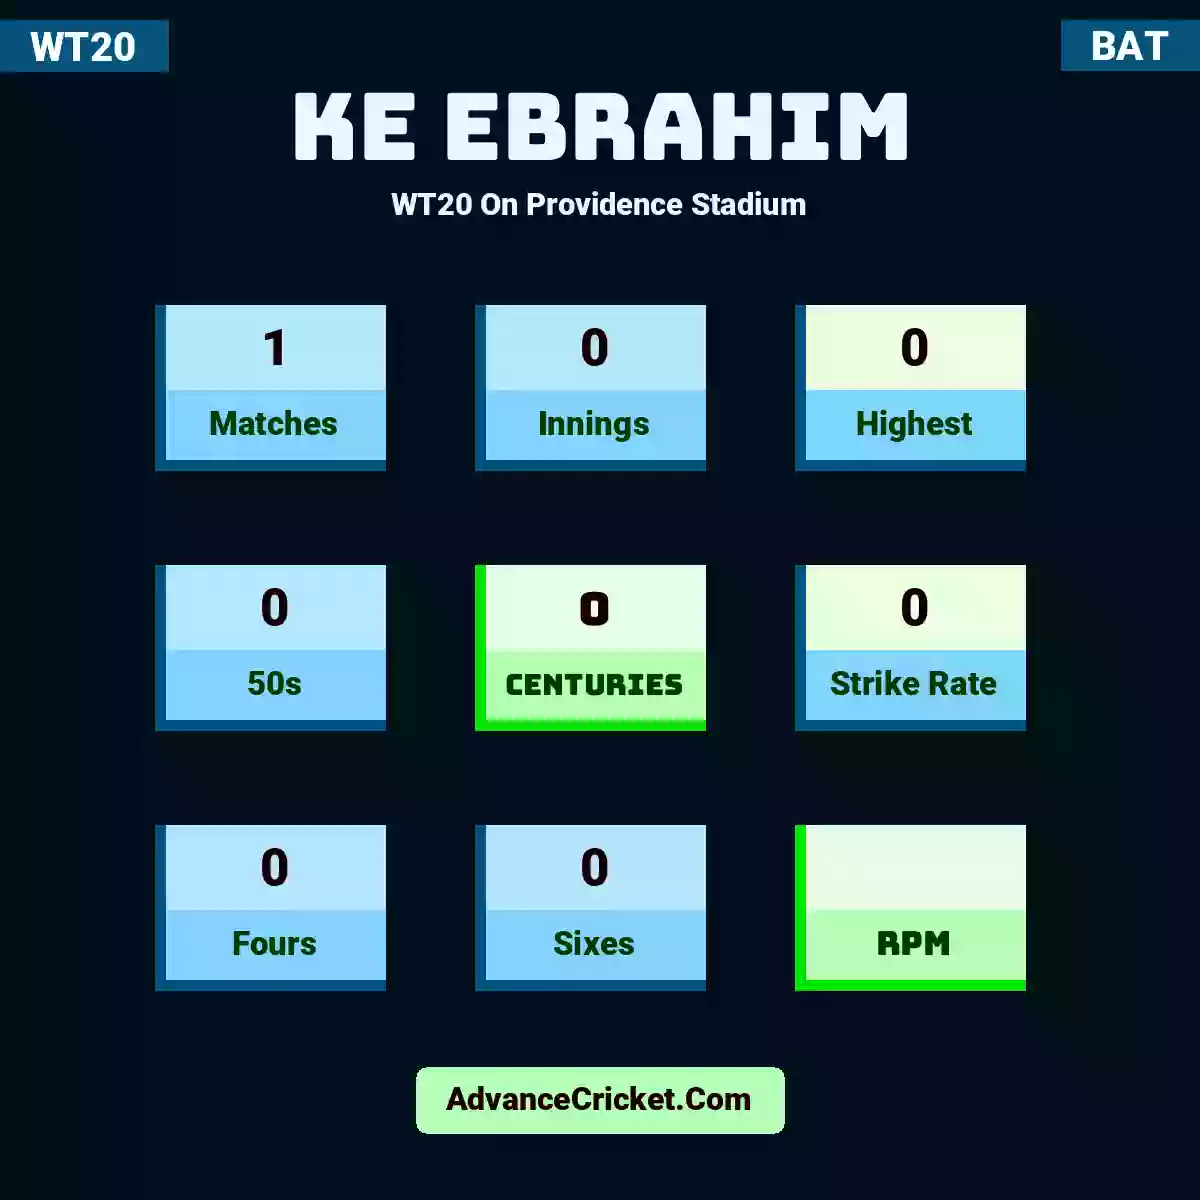 KE Ebrahim WT20  On Providence Stadium, KE Ebrahim played 1 matches, scored 0 runs as highest, 0 half-centuries, and 0 centuries, with a strike rate of 0. K.Ebrahim hit 0 fours and 0 sixes.